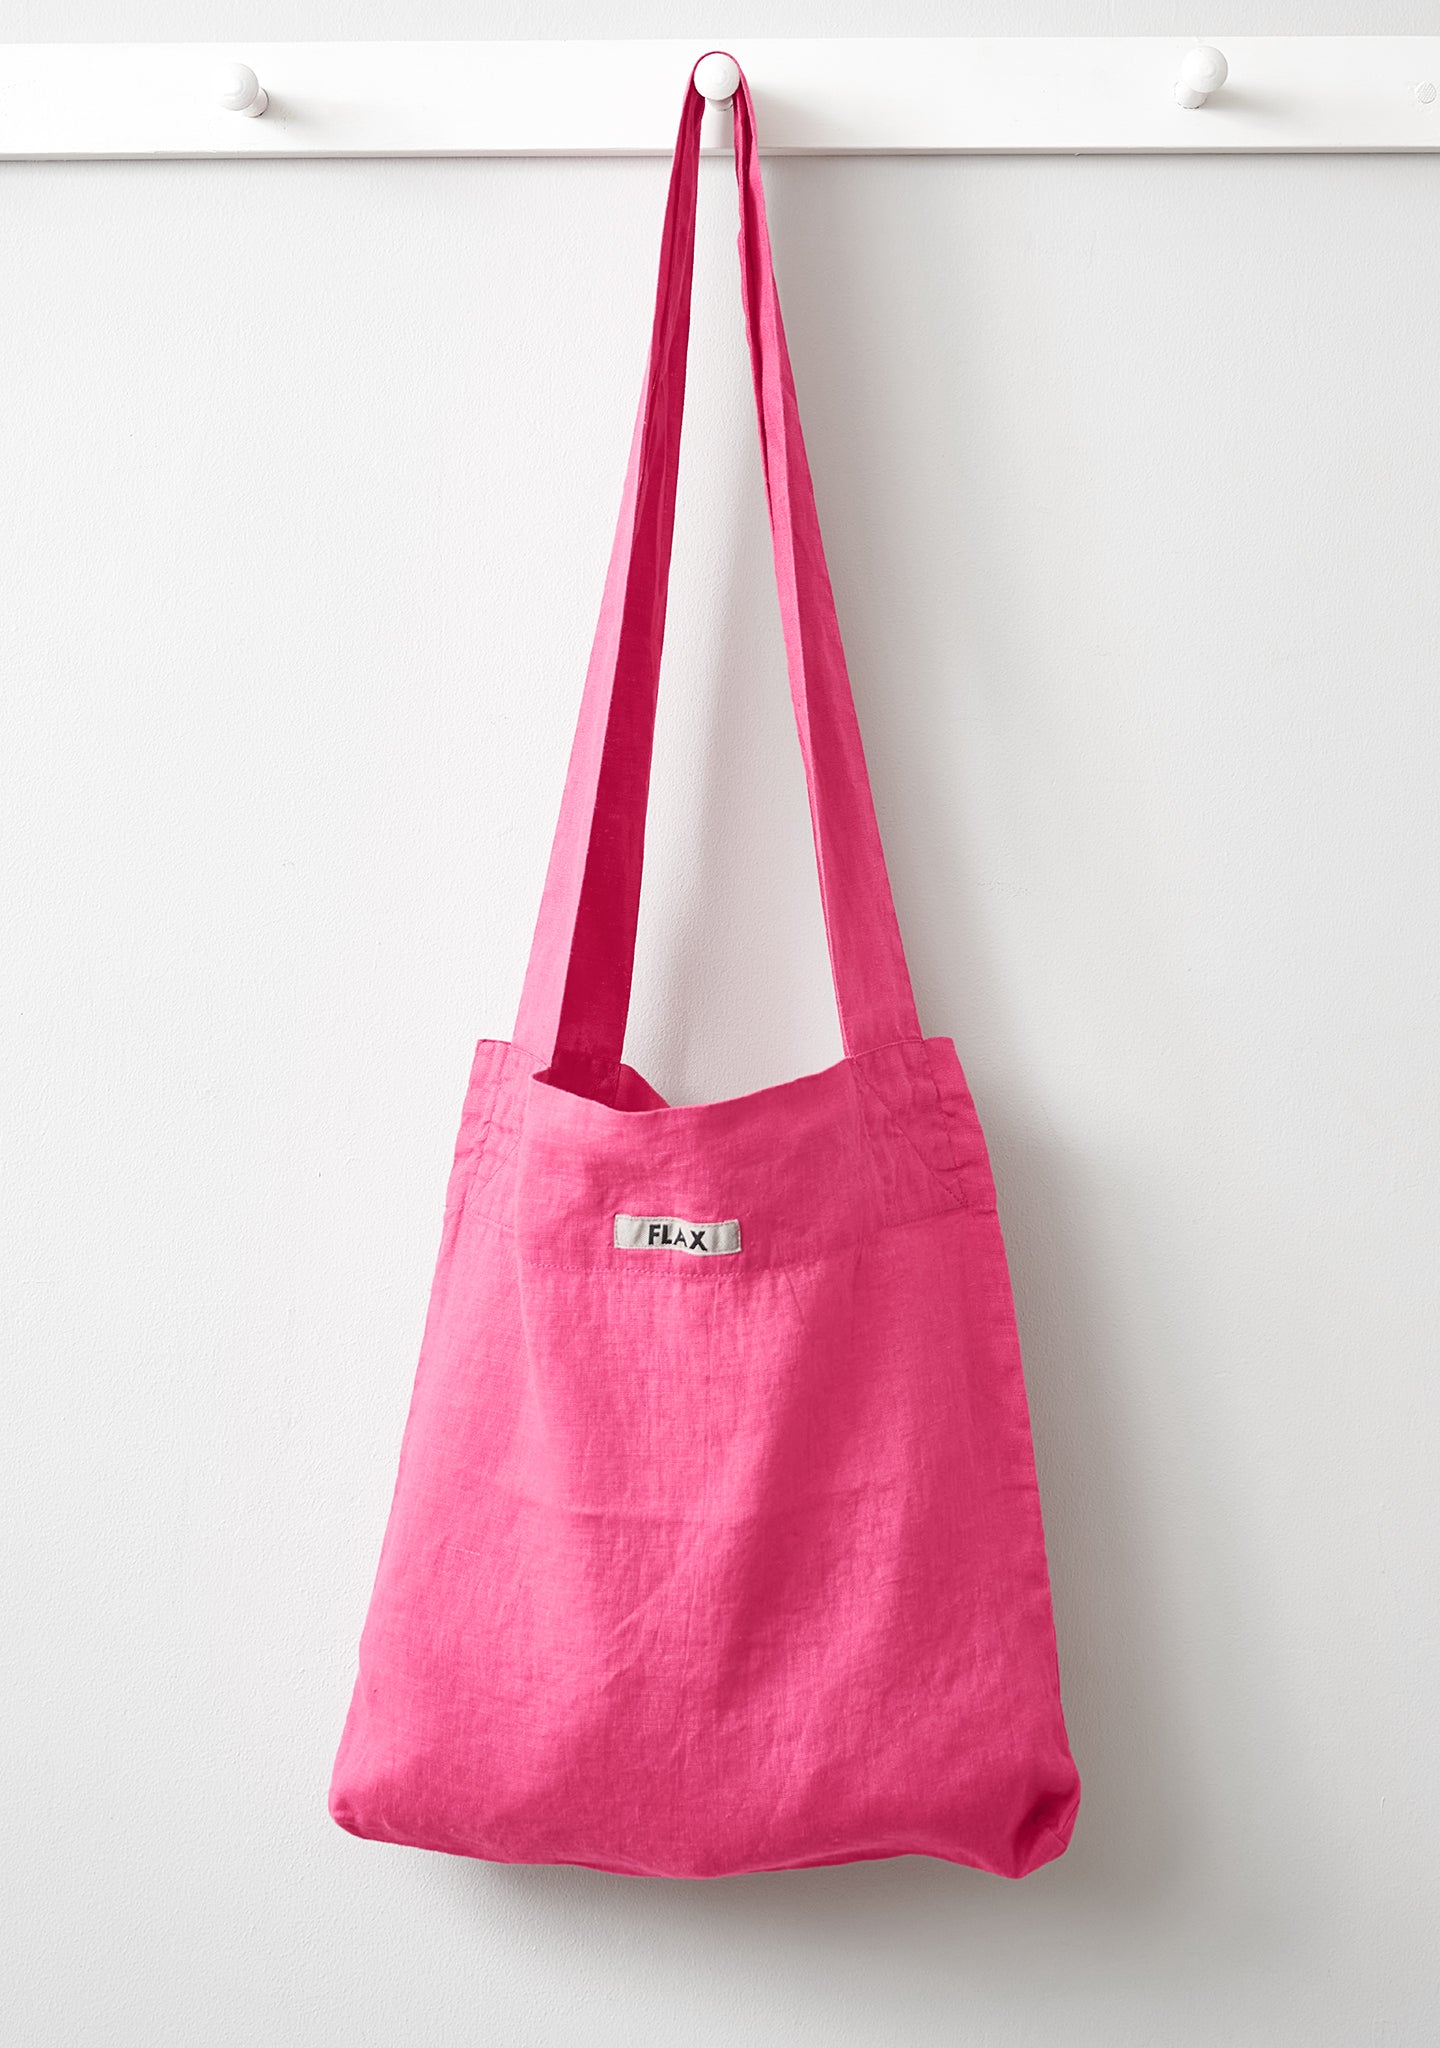 the bag linen shopping bag pink